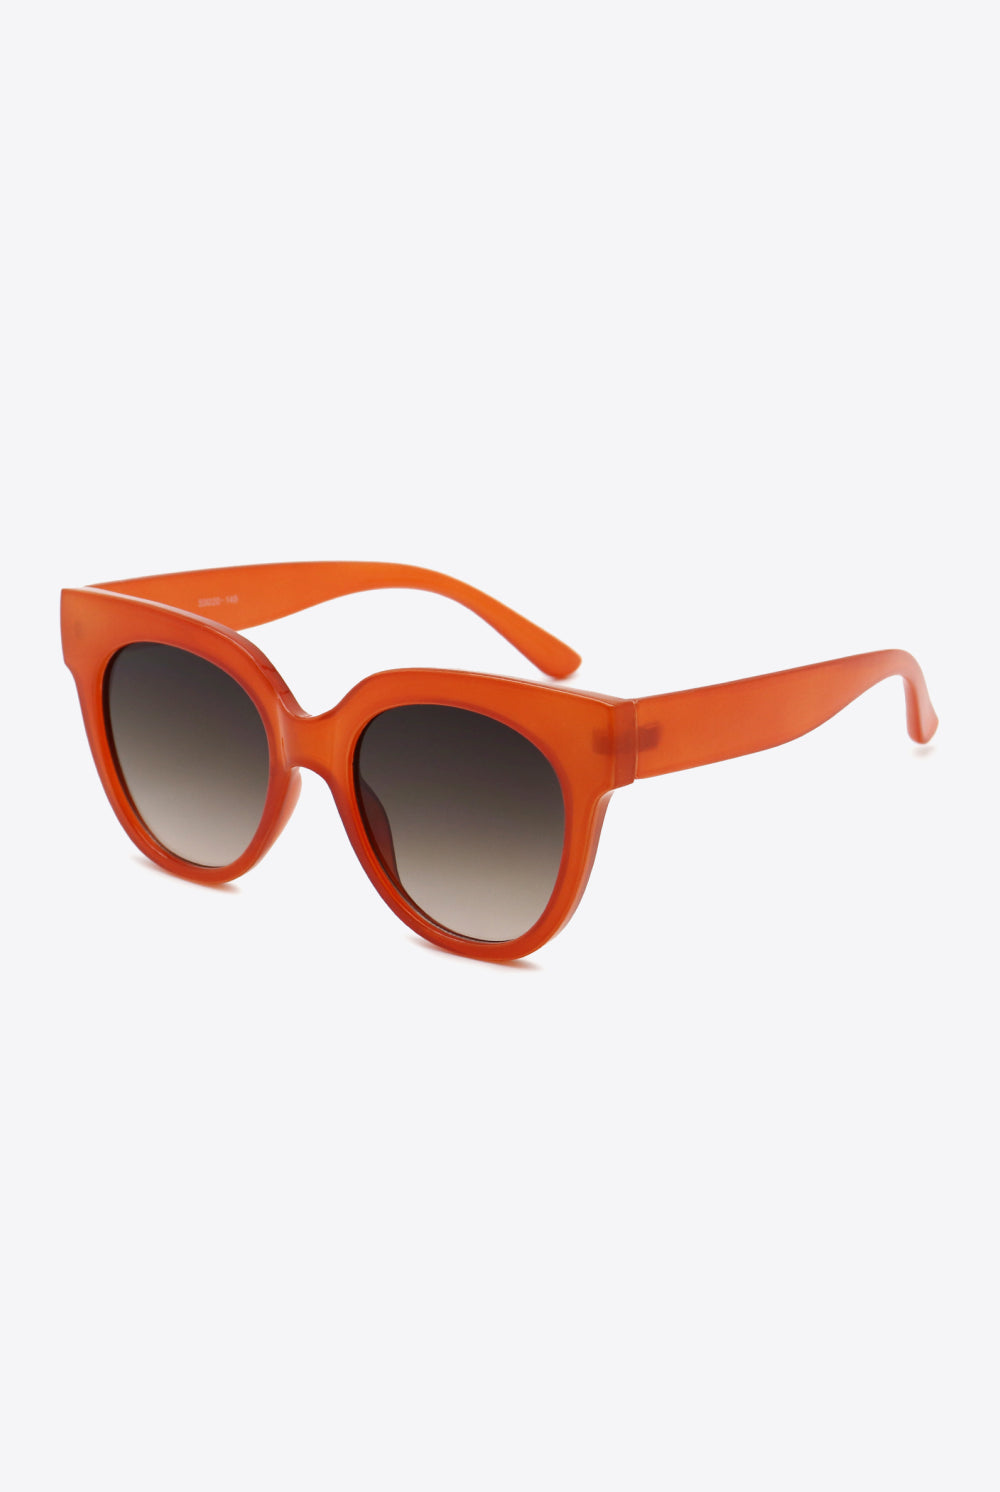 UV400 Polycarbonate Round Sunglasses - GemThreads Boutique UV400 Polycarbonate Round Sunglasses